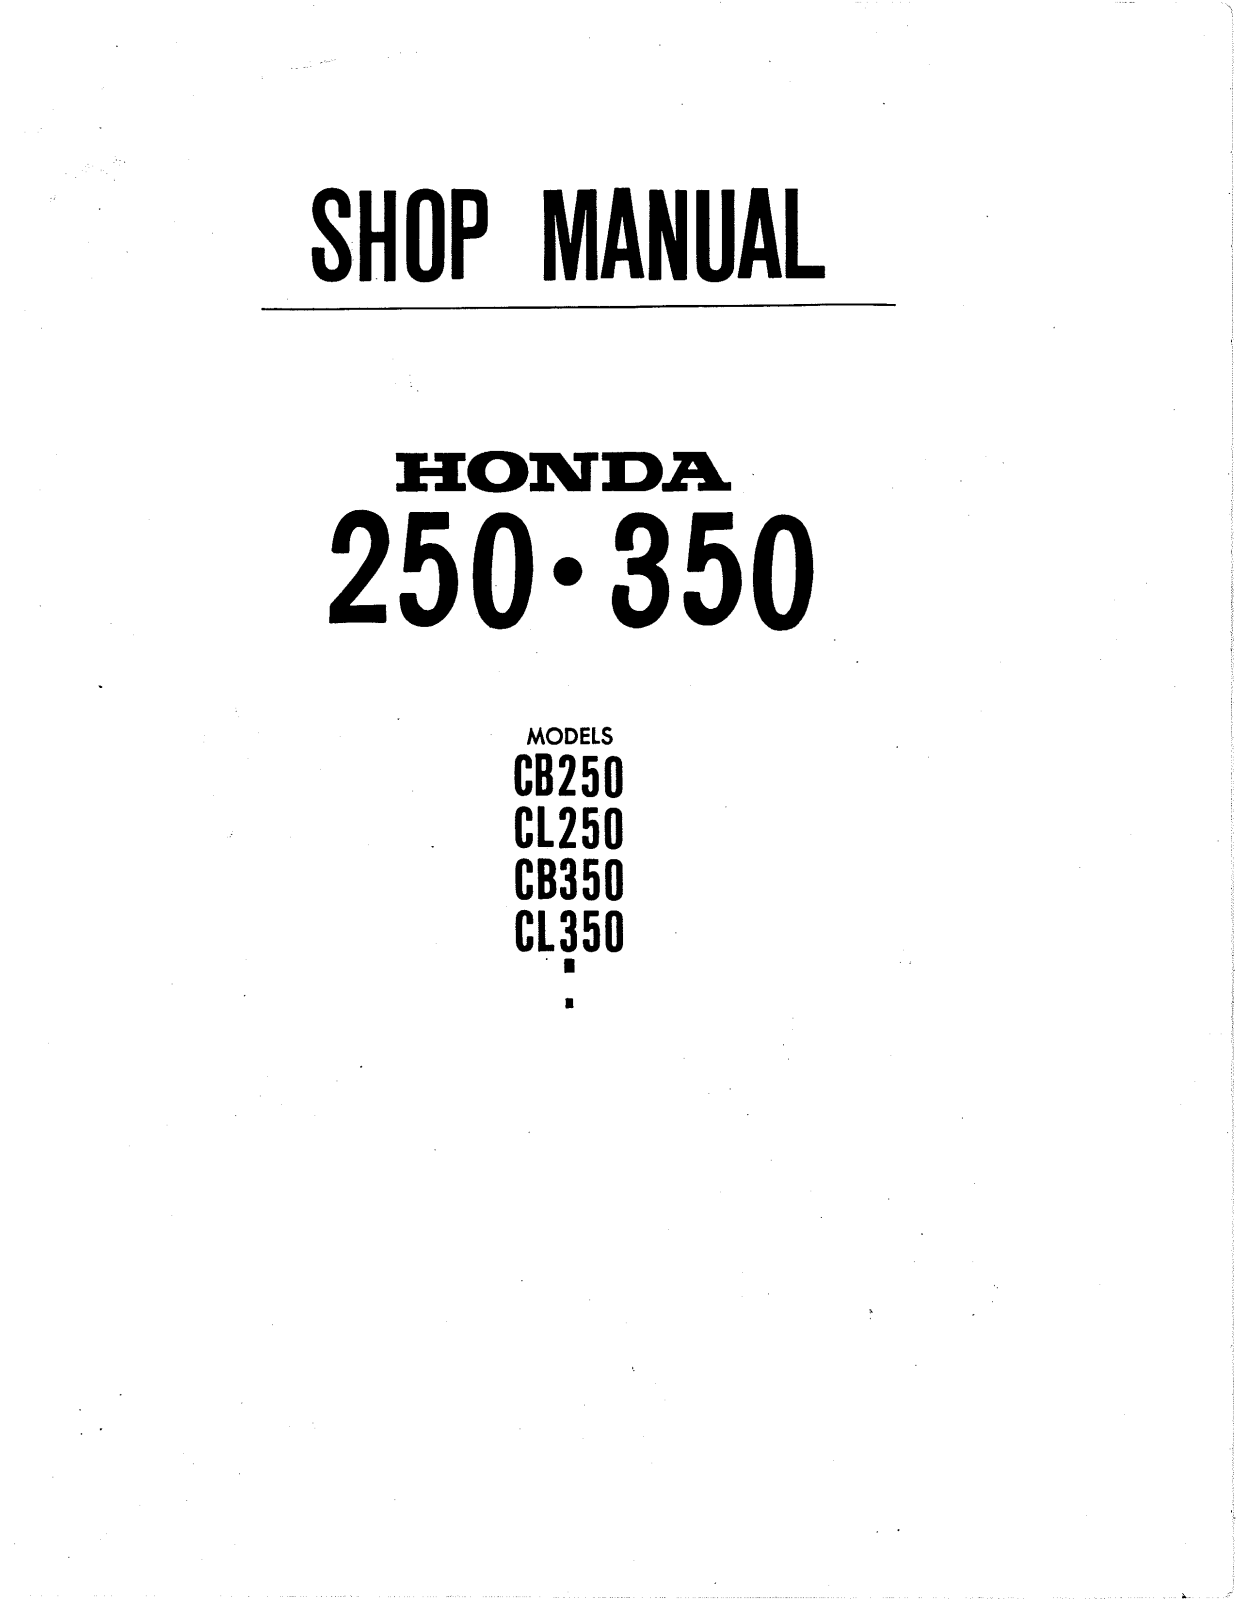 Honda CB350, CL350 User Manual